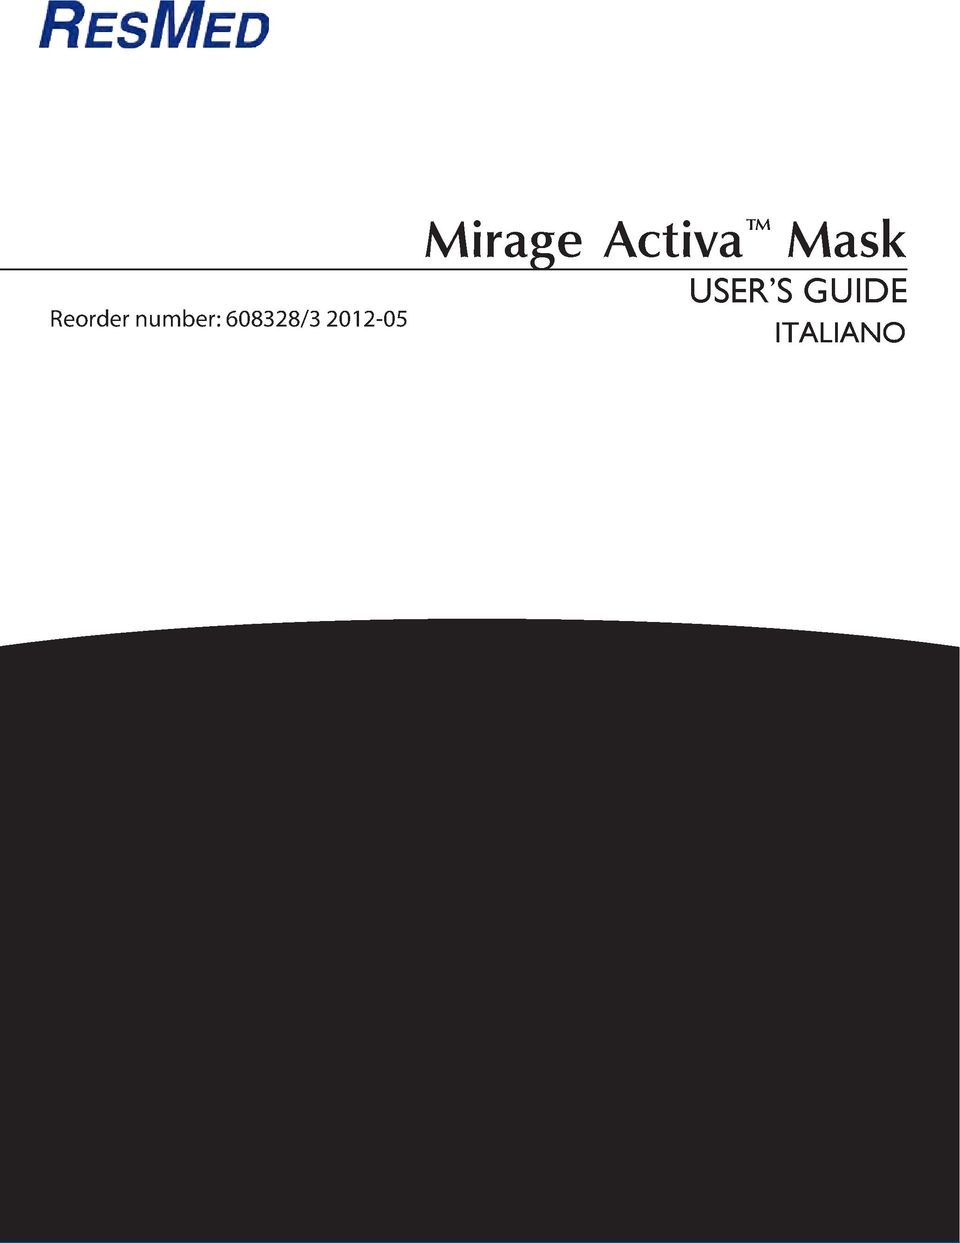 Mirage Activa Mask